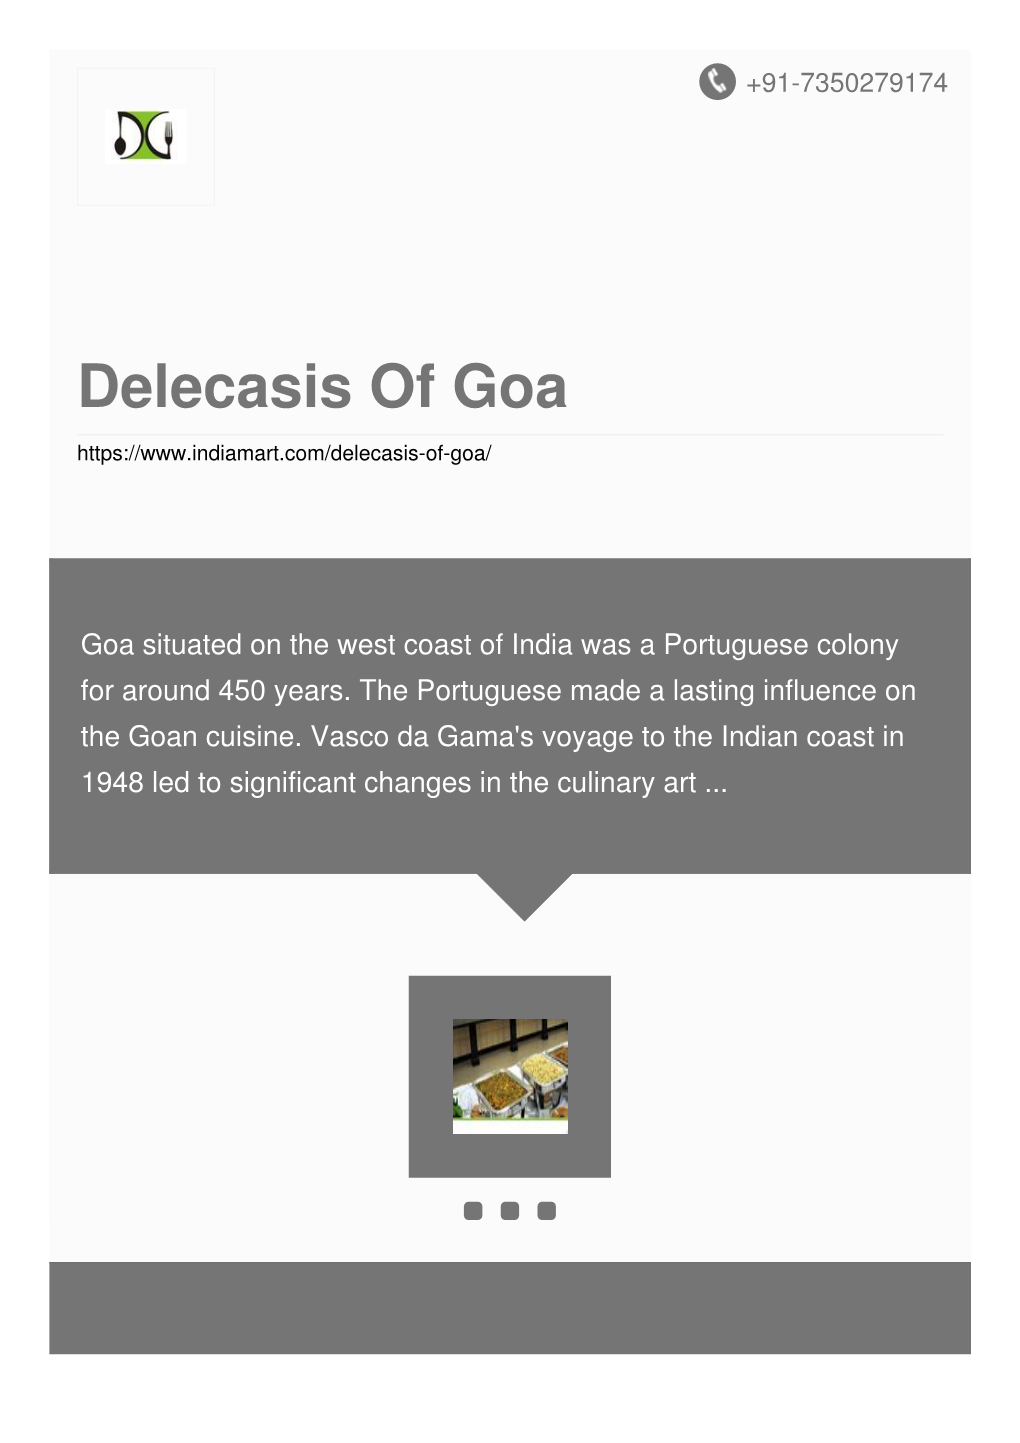 Delecasis of Goa